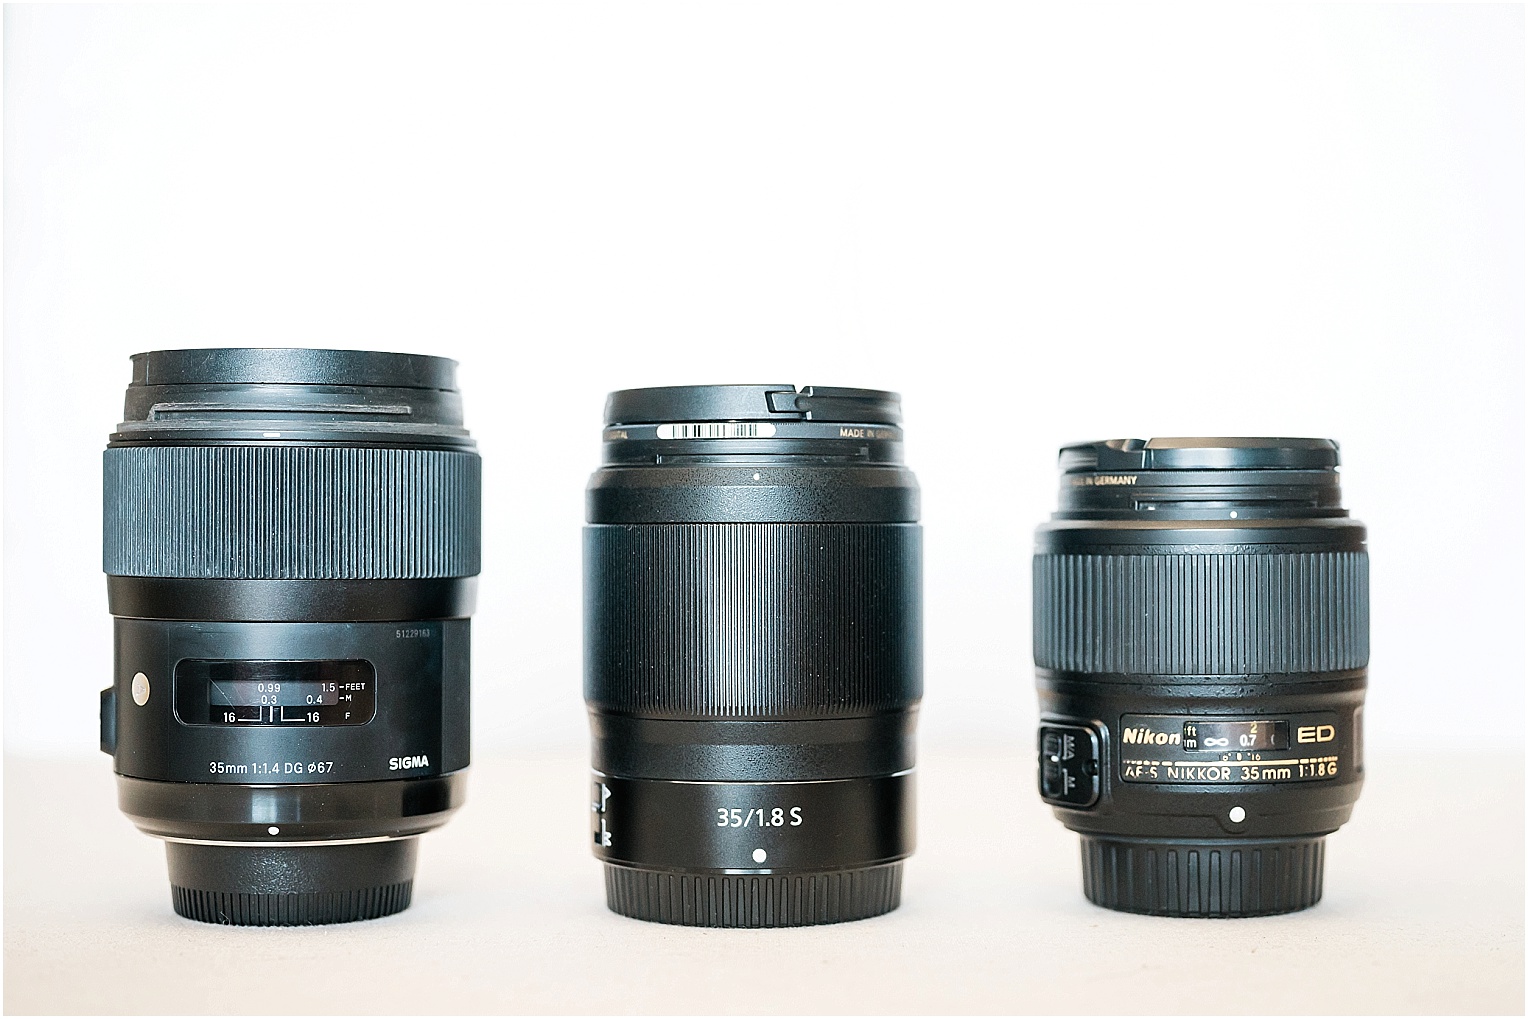 Morgue extend Revocation Nikon 35 mm 1.8G vs Sigma 35 mm 1.4 ART | For Photographers